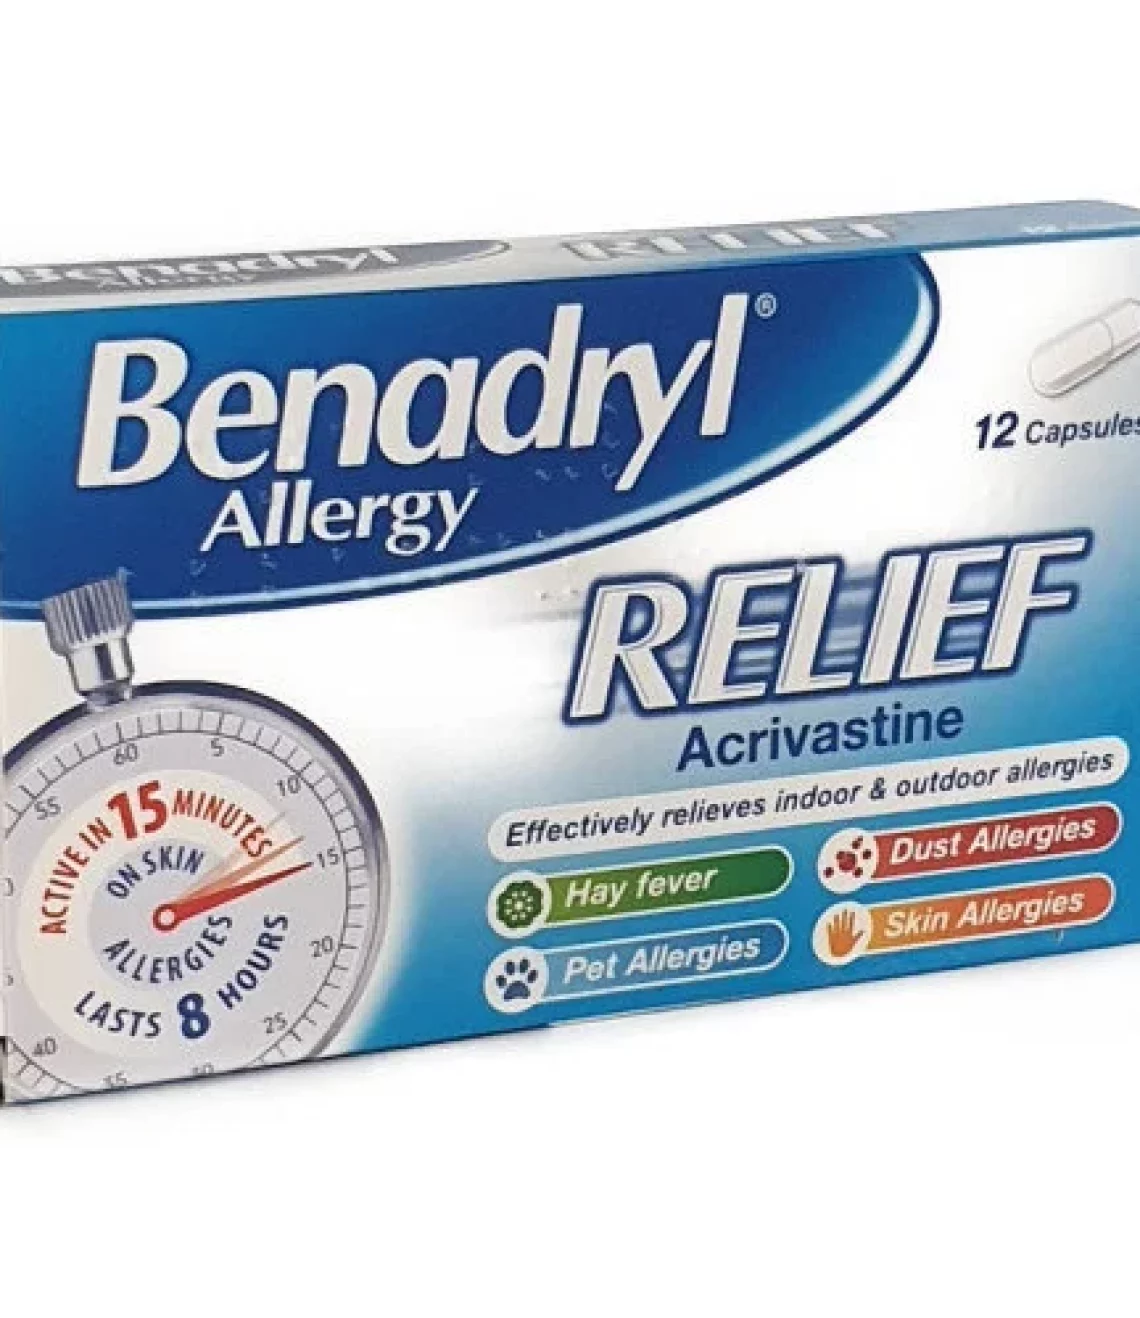 simple-online-pharmacy-benadryl-allergy-relief-benadryl-allergy-relief-capsules-1556721540Benadryl-Allergy-Relief-Capsules-1-